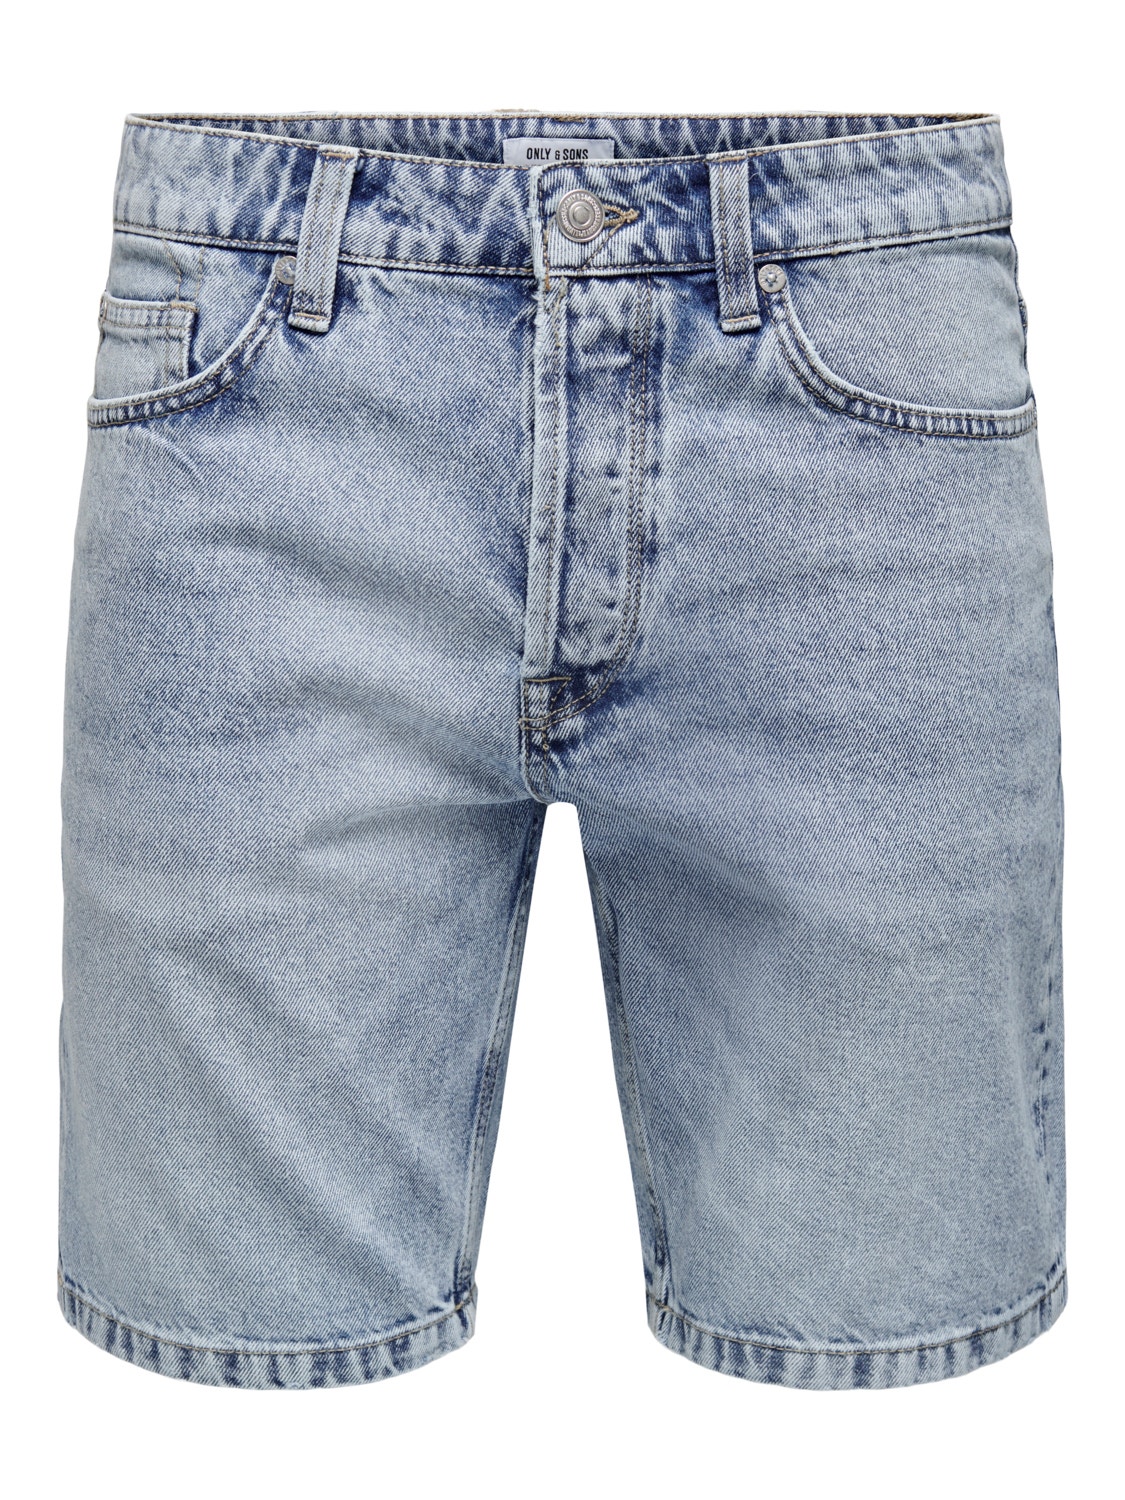 ONLY & SONS Loose fit Regular rise Shorts -Light Blue Denim - 22024846